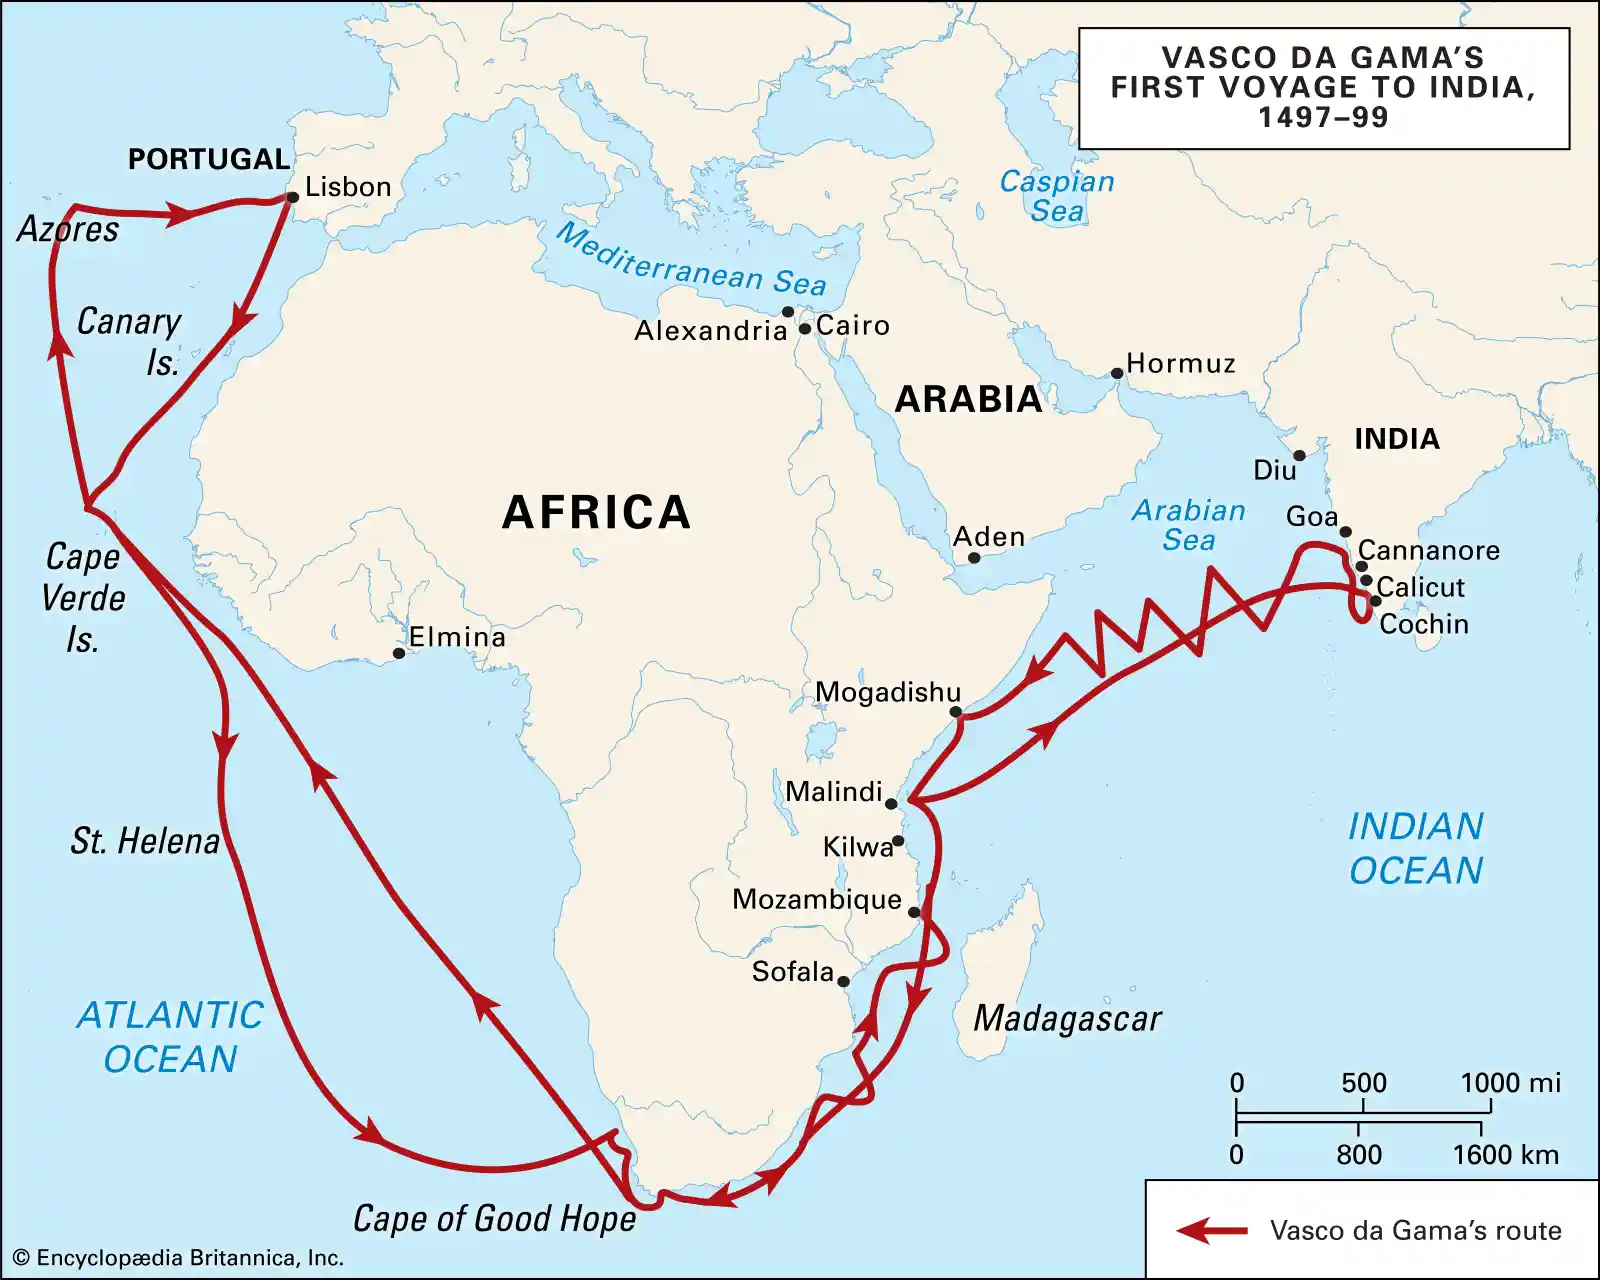 The sea route taken by Vasco Da Gama to reach India; Image source: Encyclopaedia Britannica.